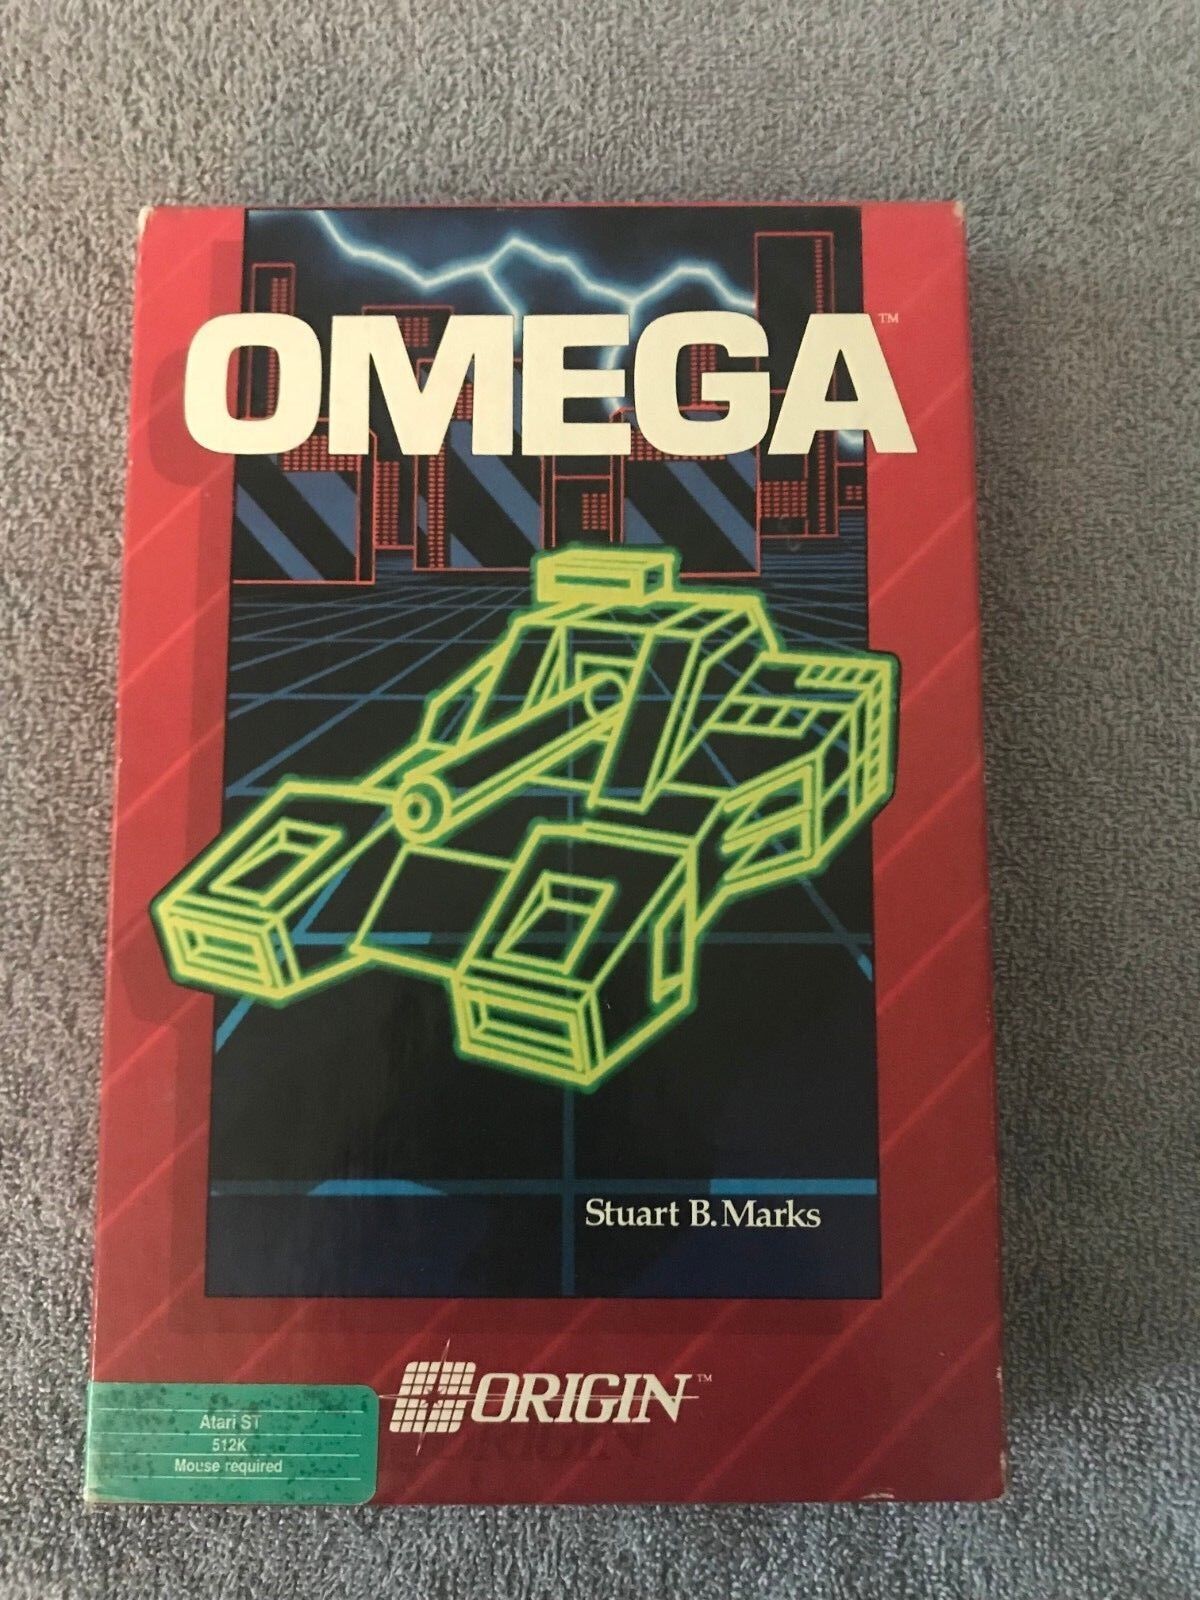 Omega - Origin - Atari ST